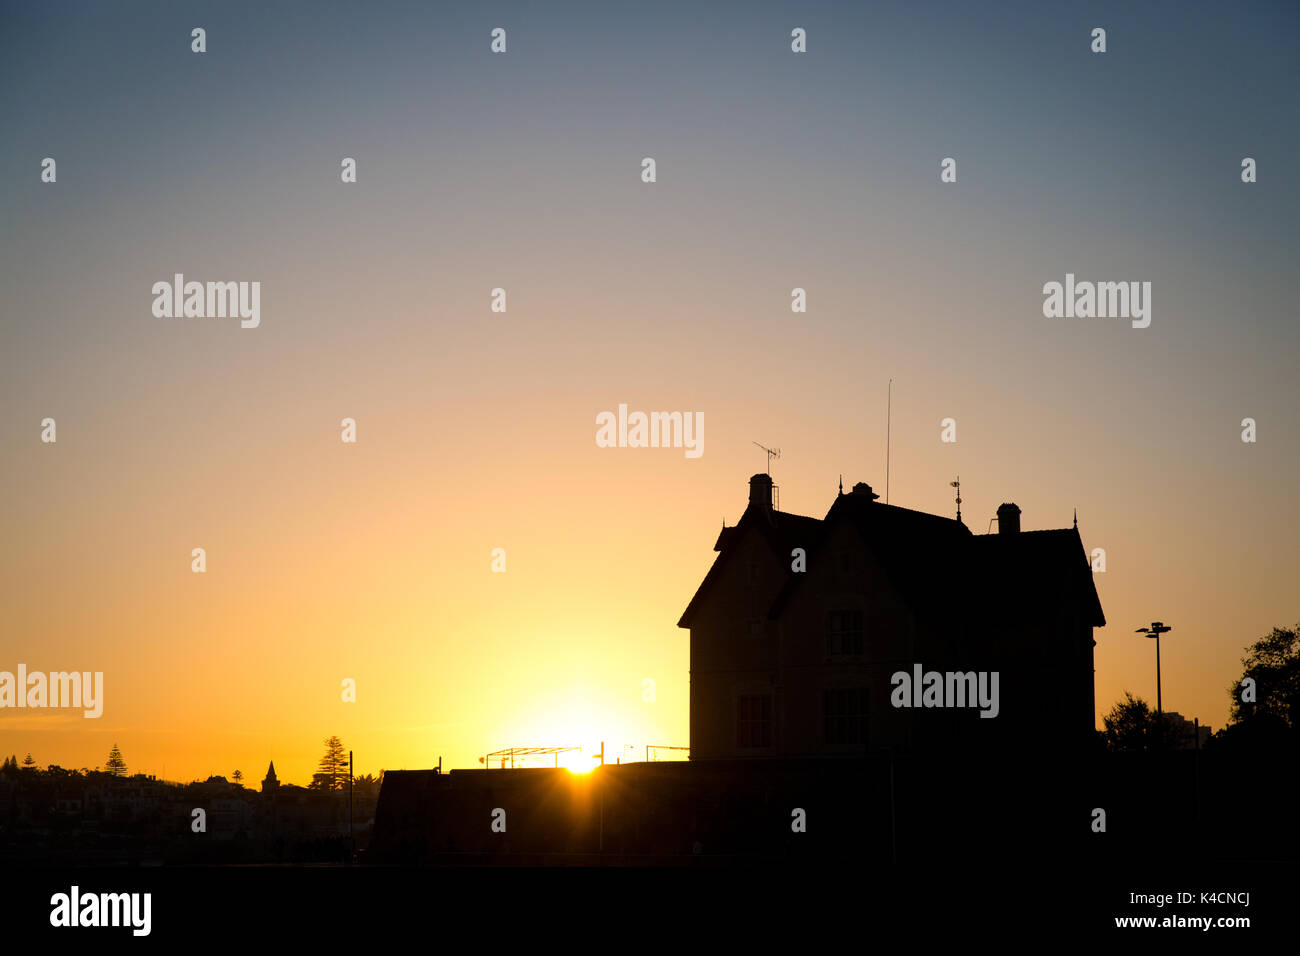 House Before Rising Sun Stock Photo